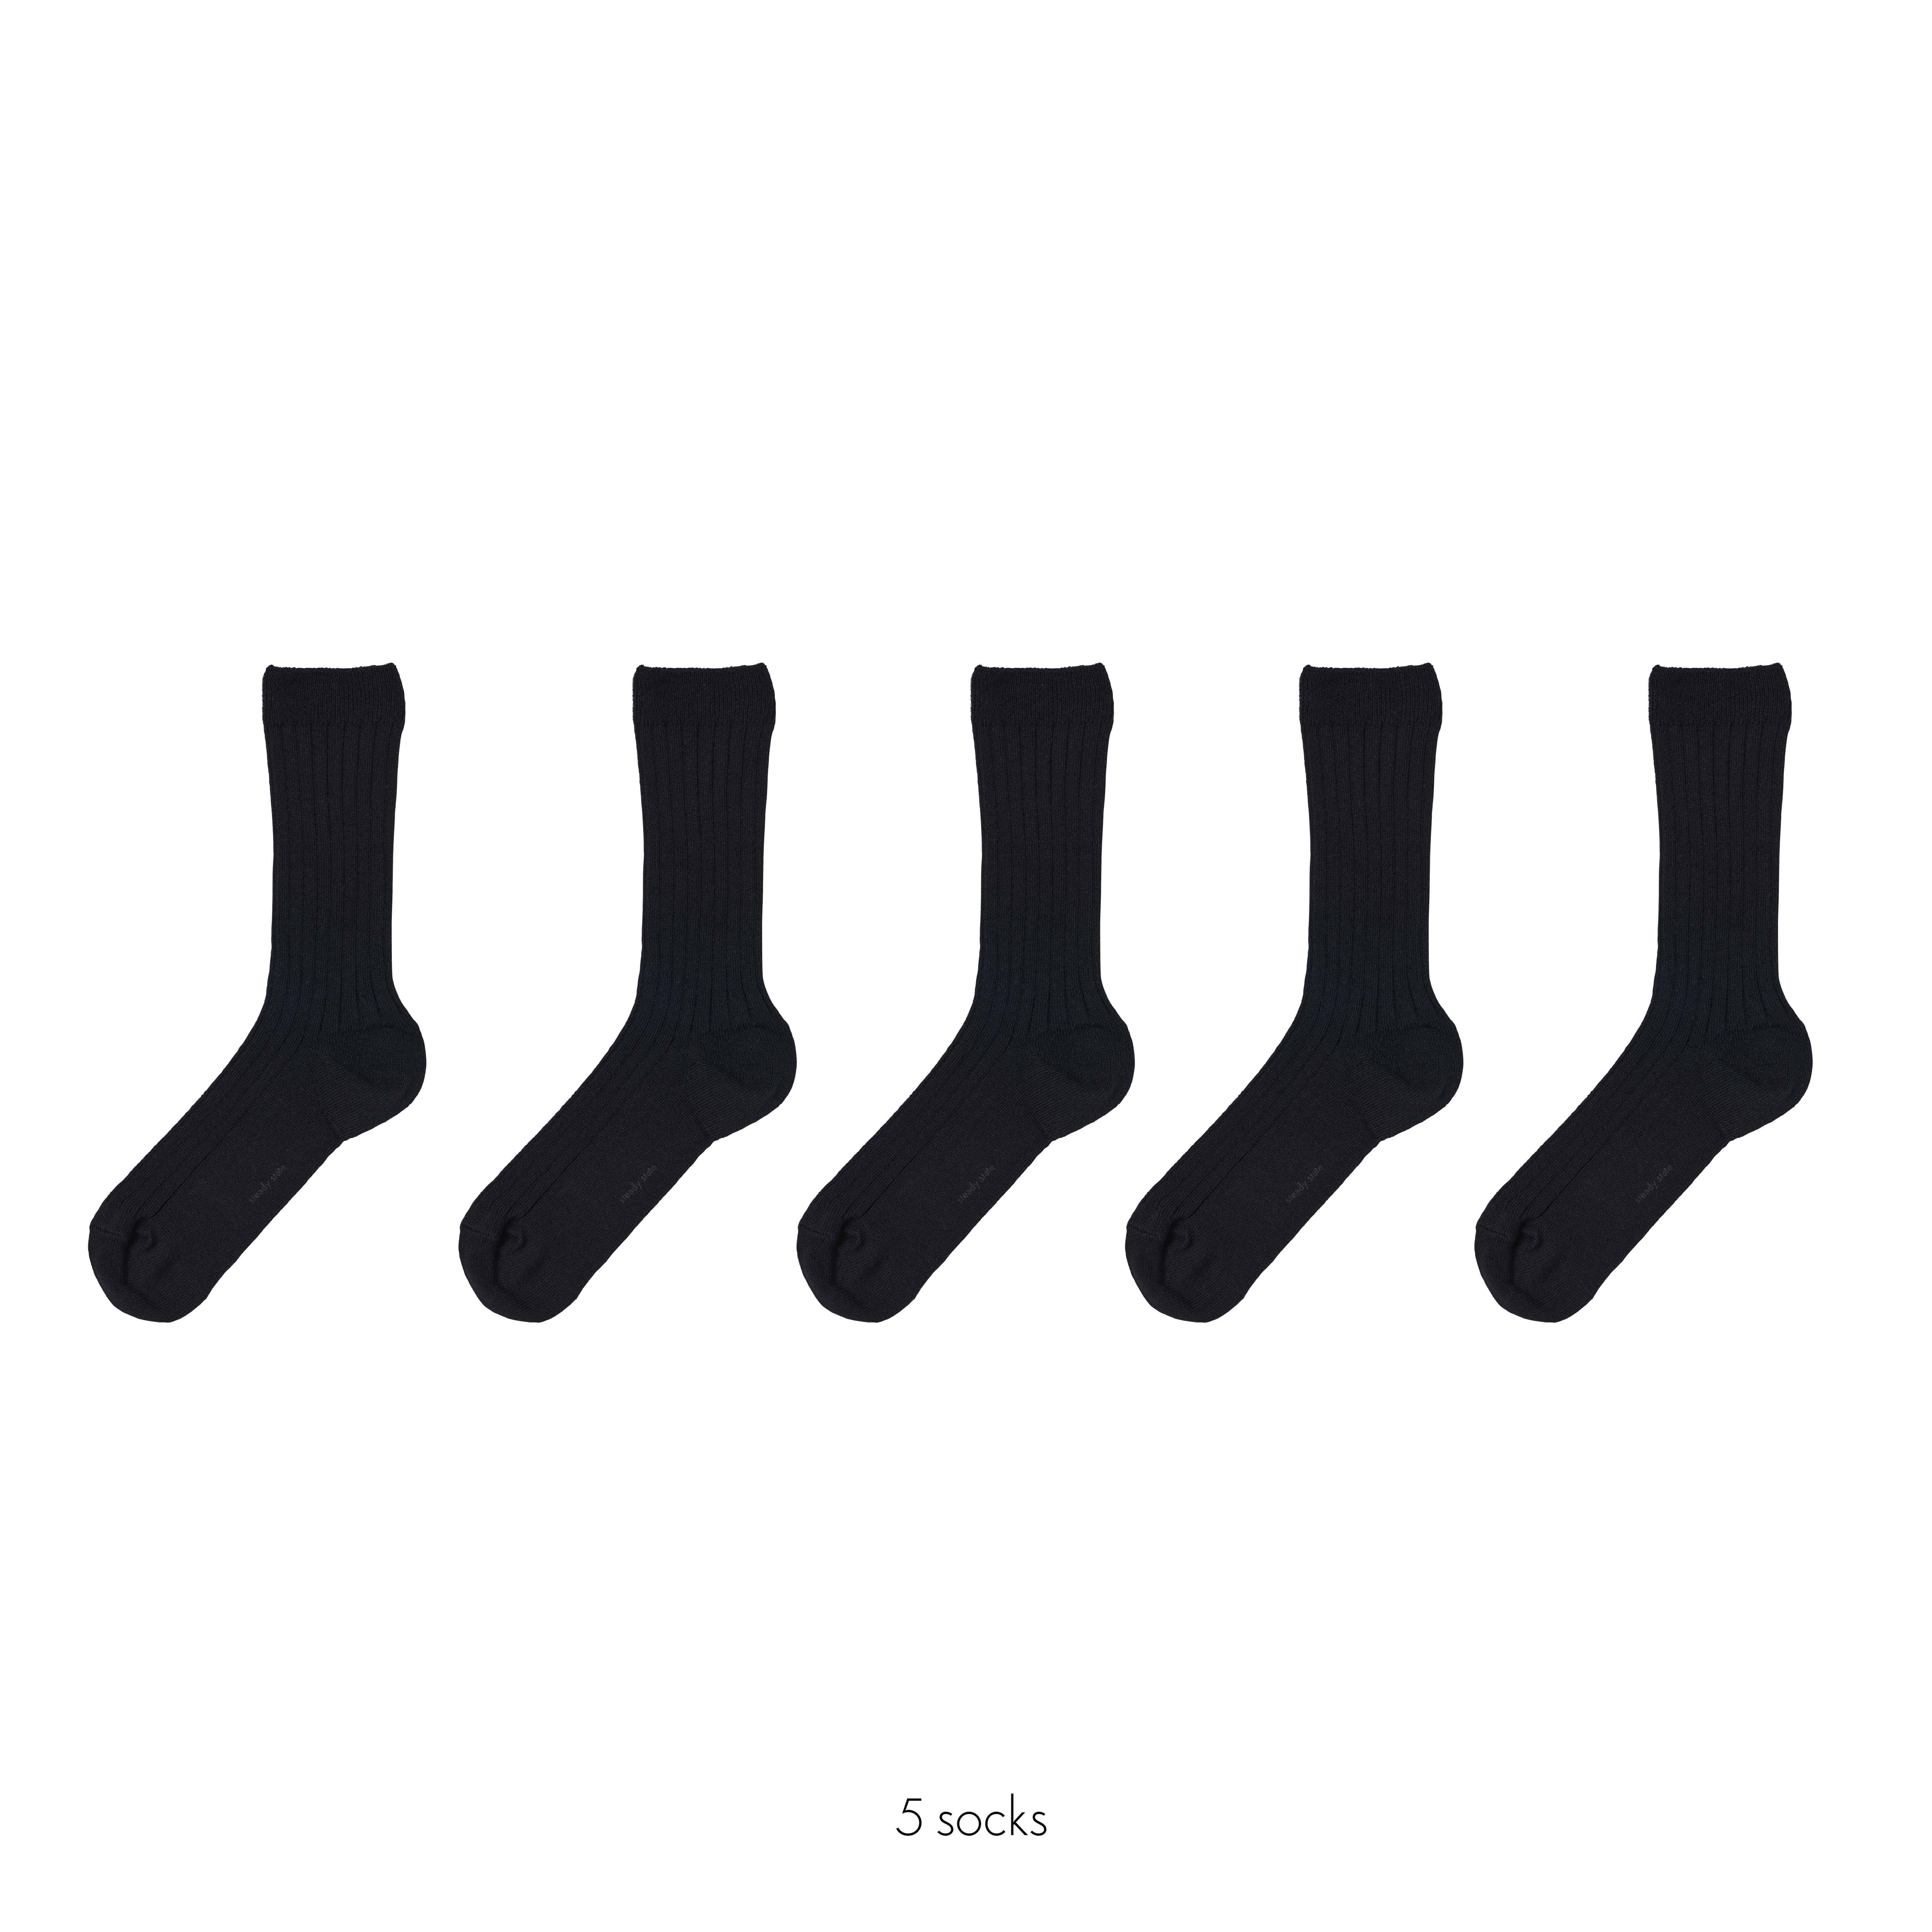 5 Socks Cotton Black Socks